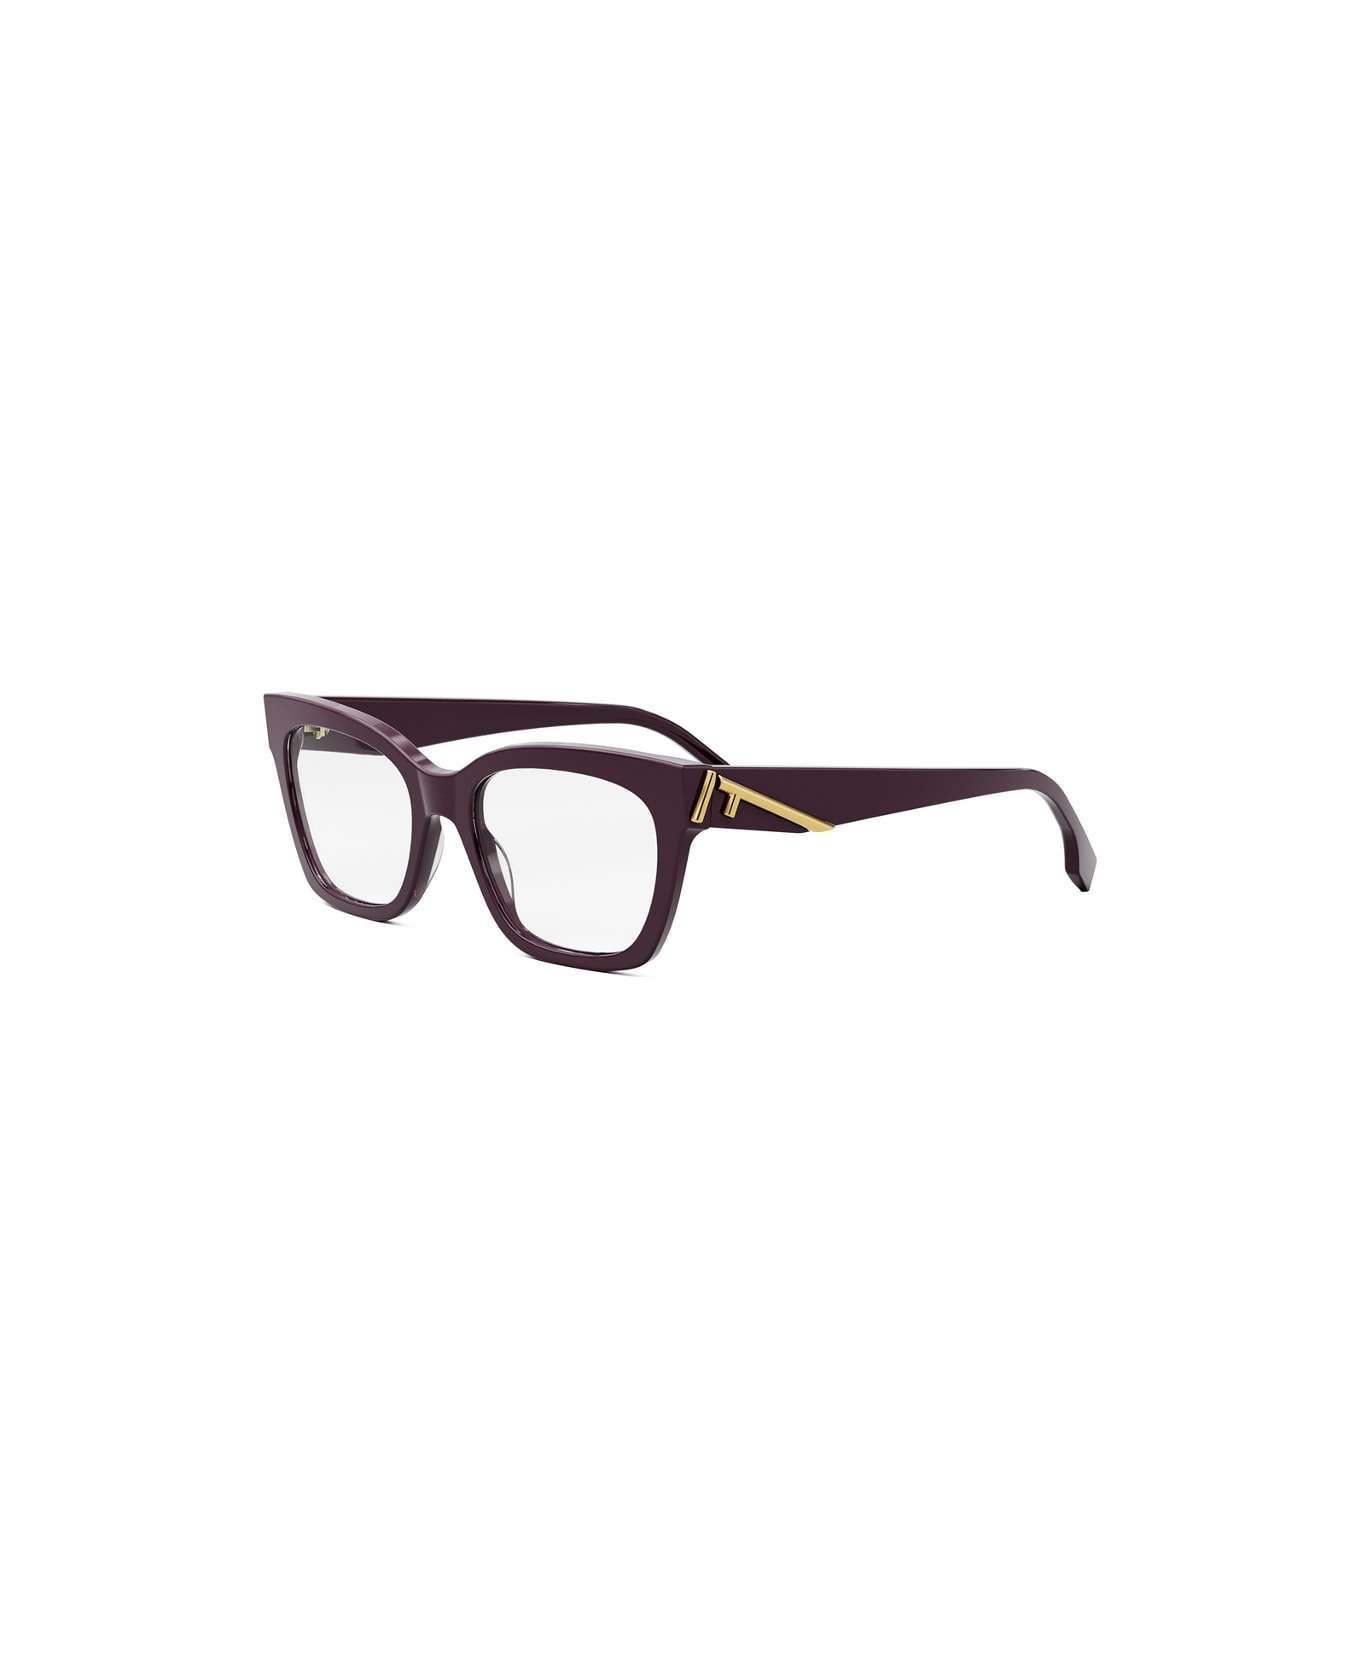 Fendi Eyewear FE50073i 081 Glasses - Vinaccia